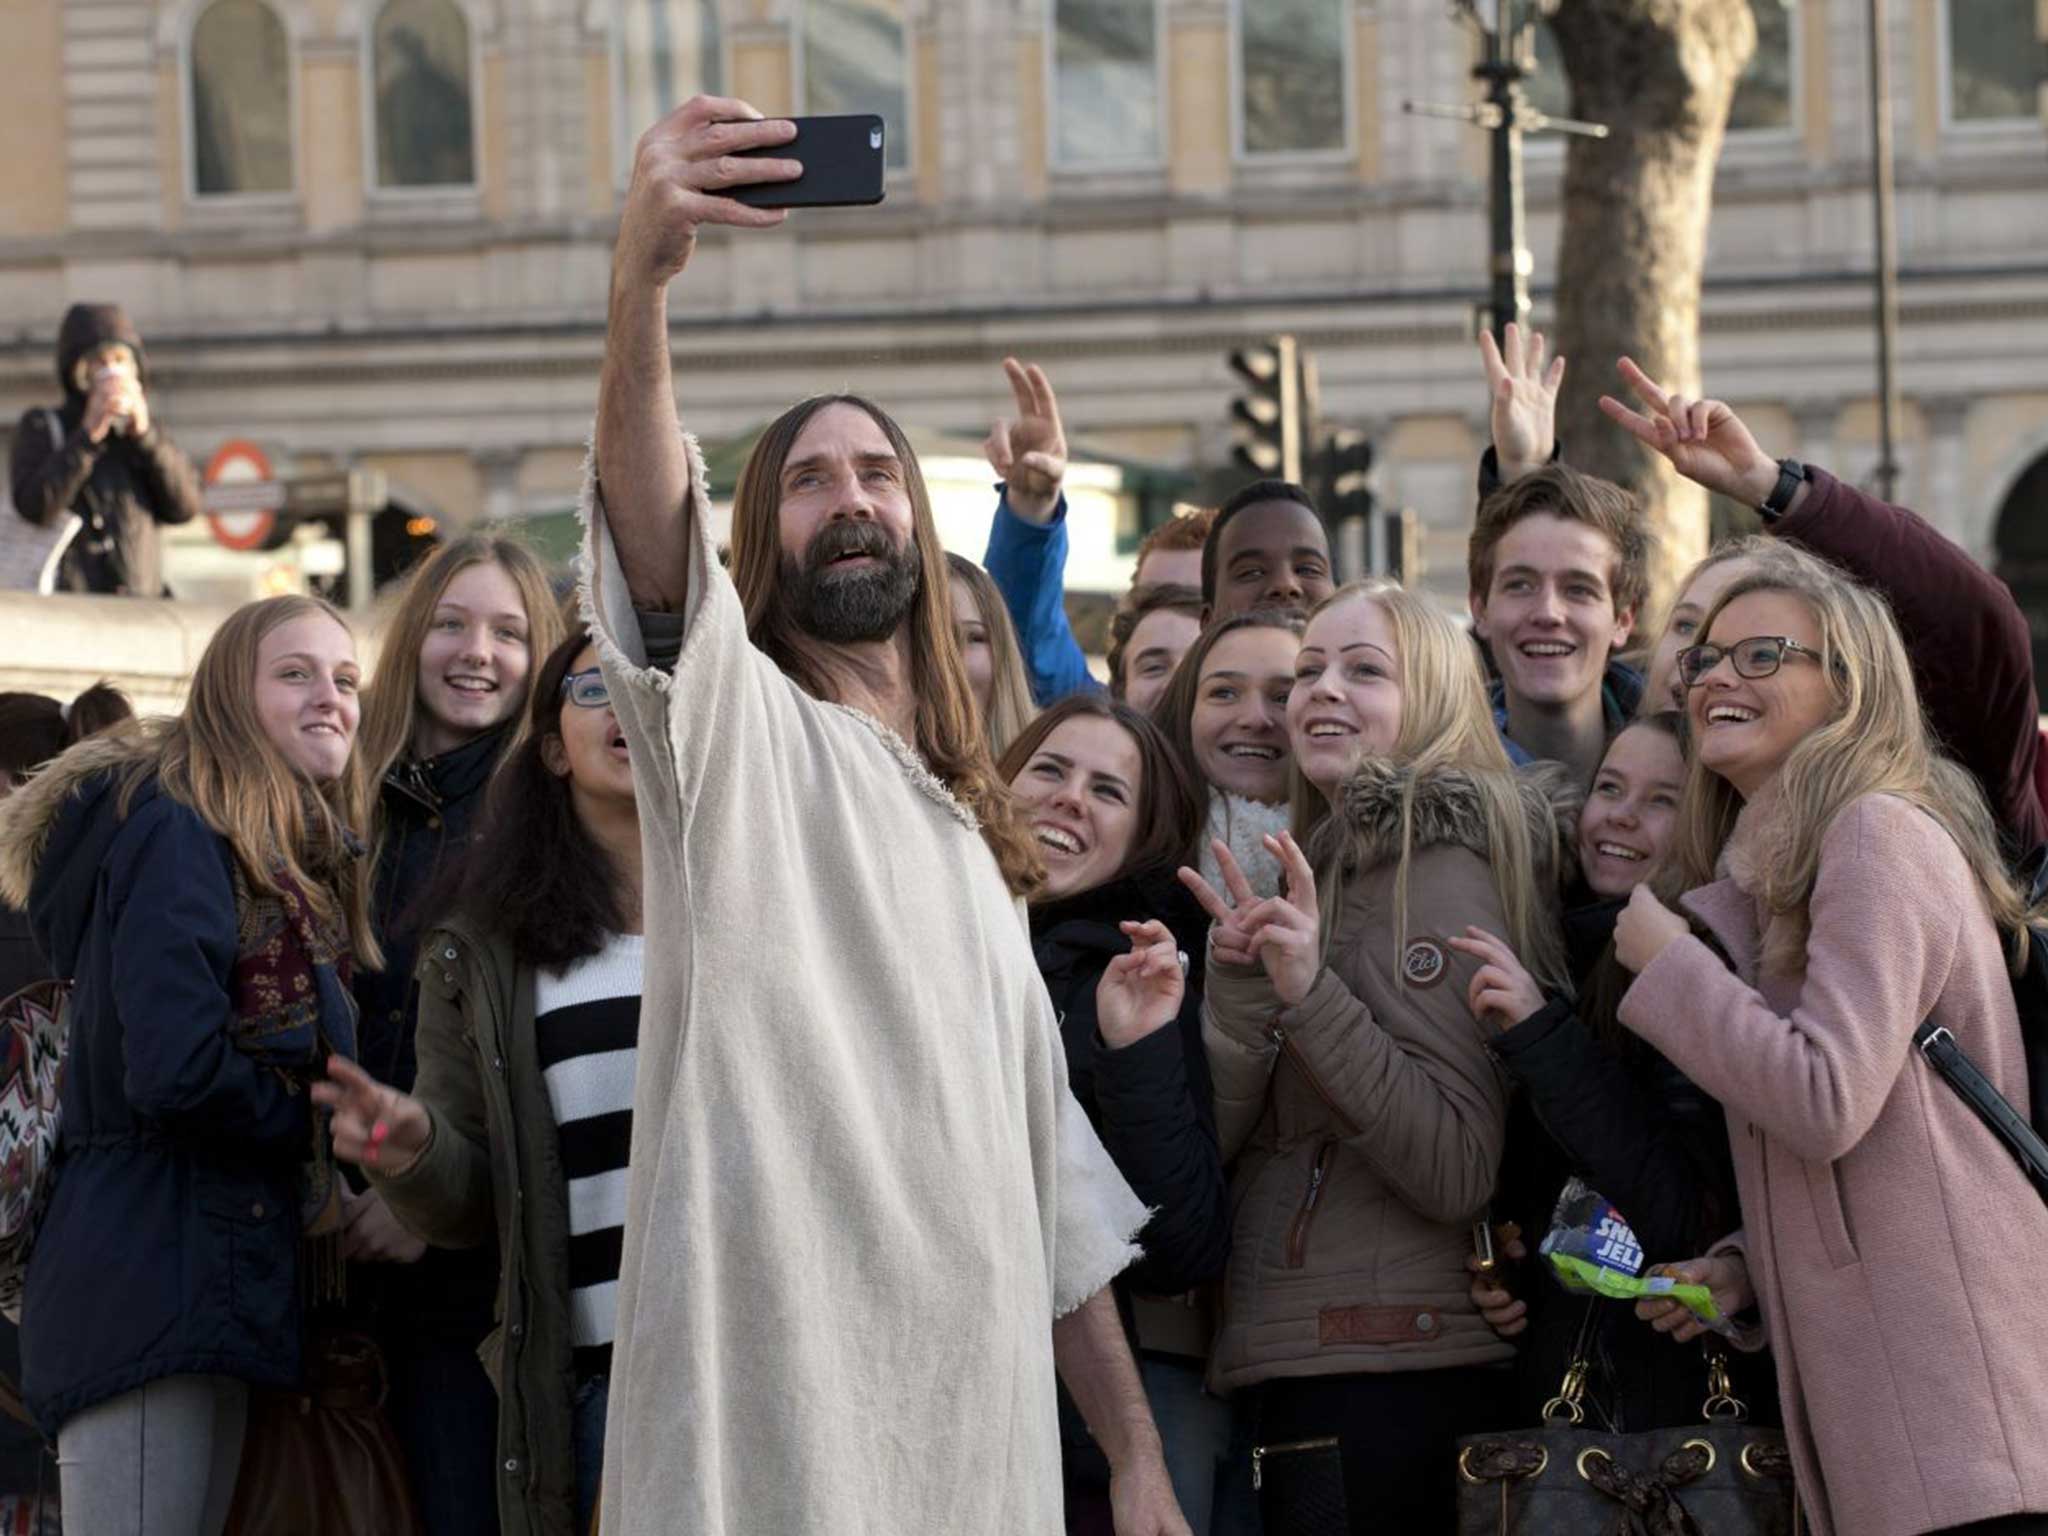 Jesus is my homeboy: Kevin Lee Light takes a selfie in London